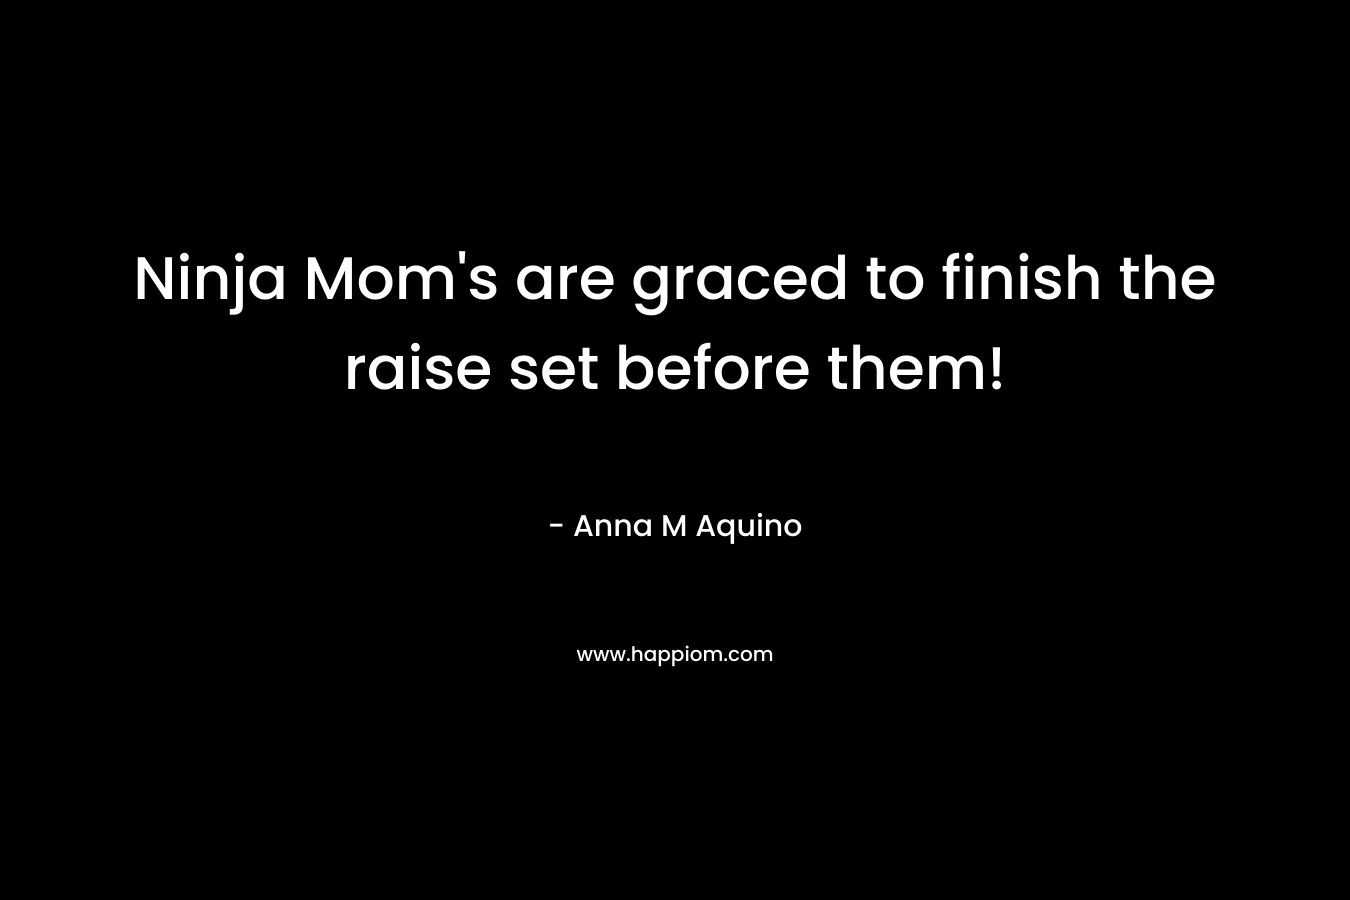 Ninja Mom’s are graced to finish the raise set before them! – Anna M Aquino